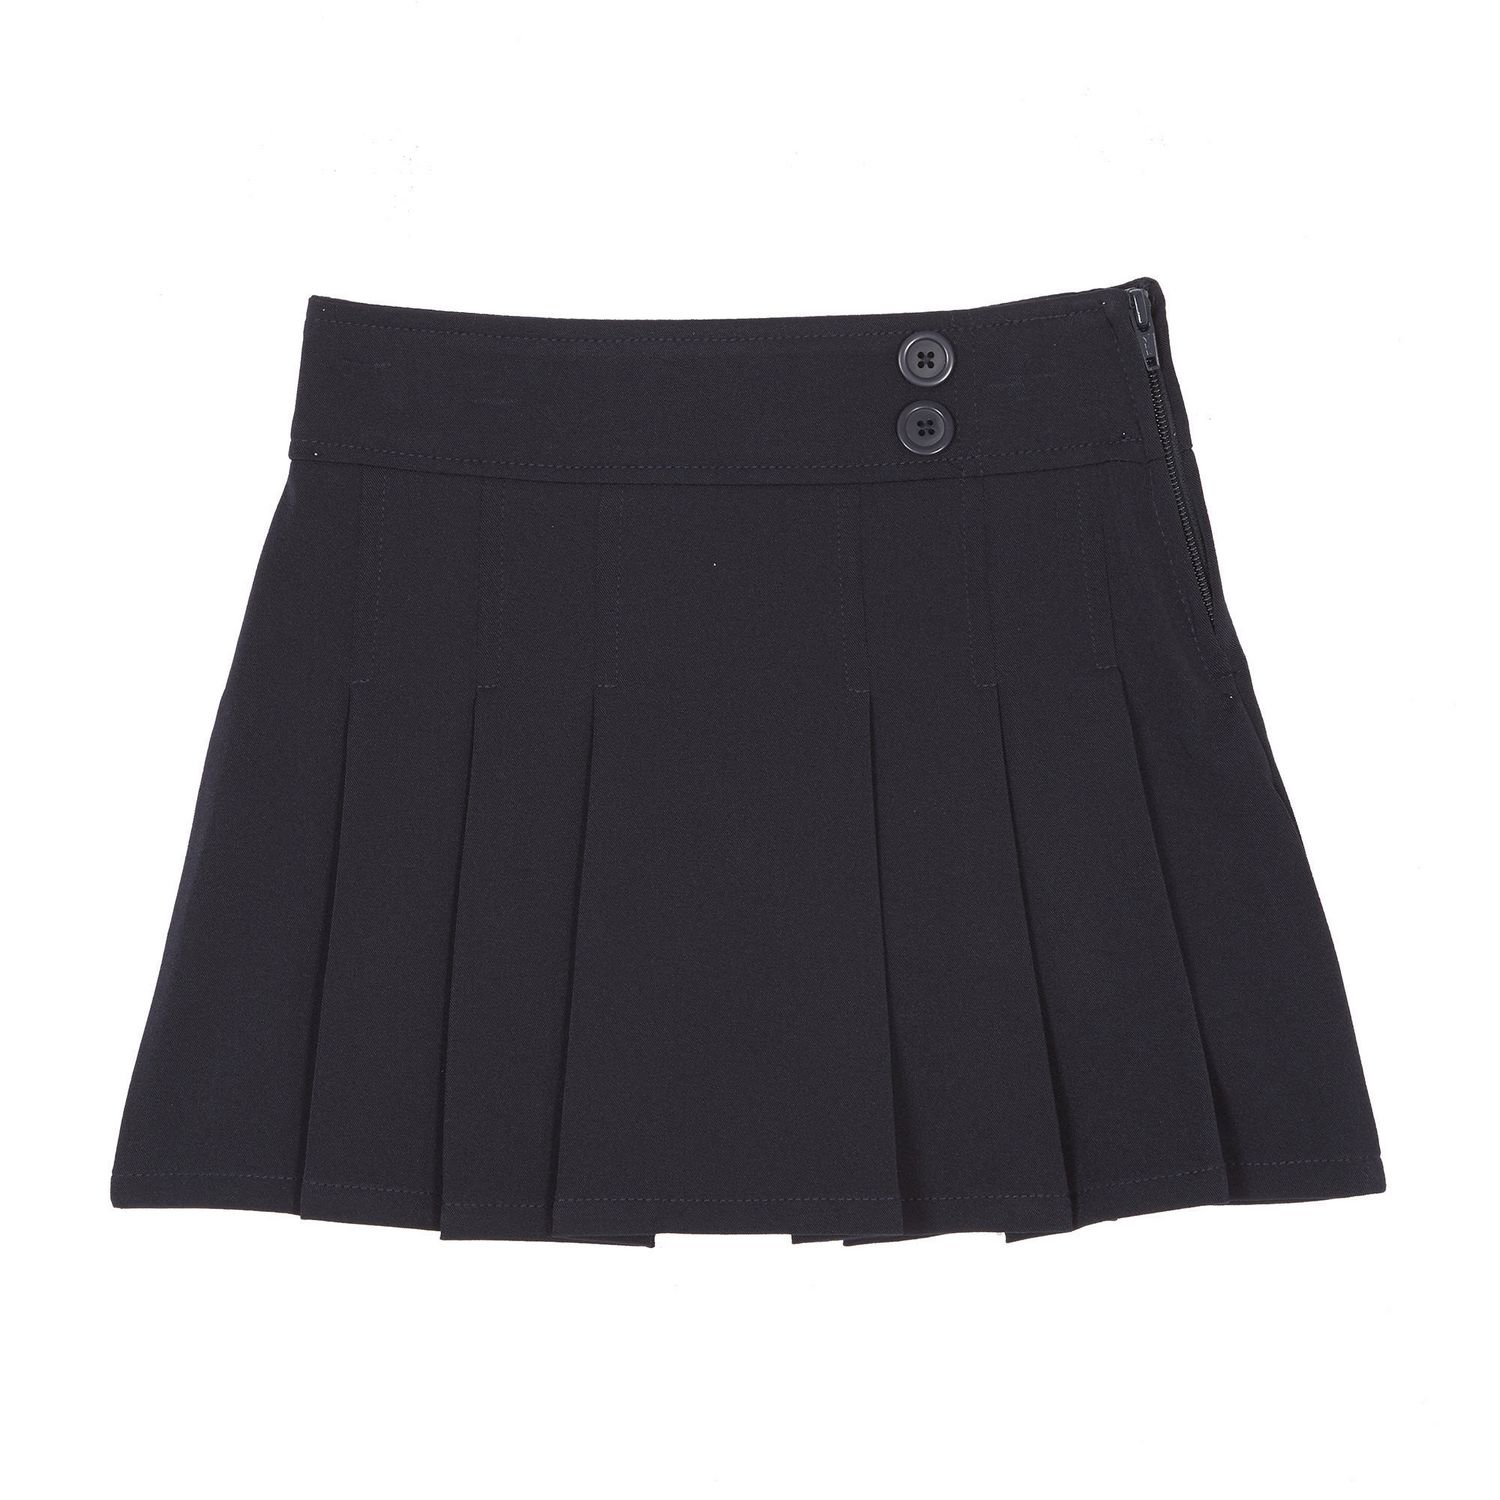 George Girls' Uniform Skirt | Walmart Canada